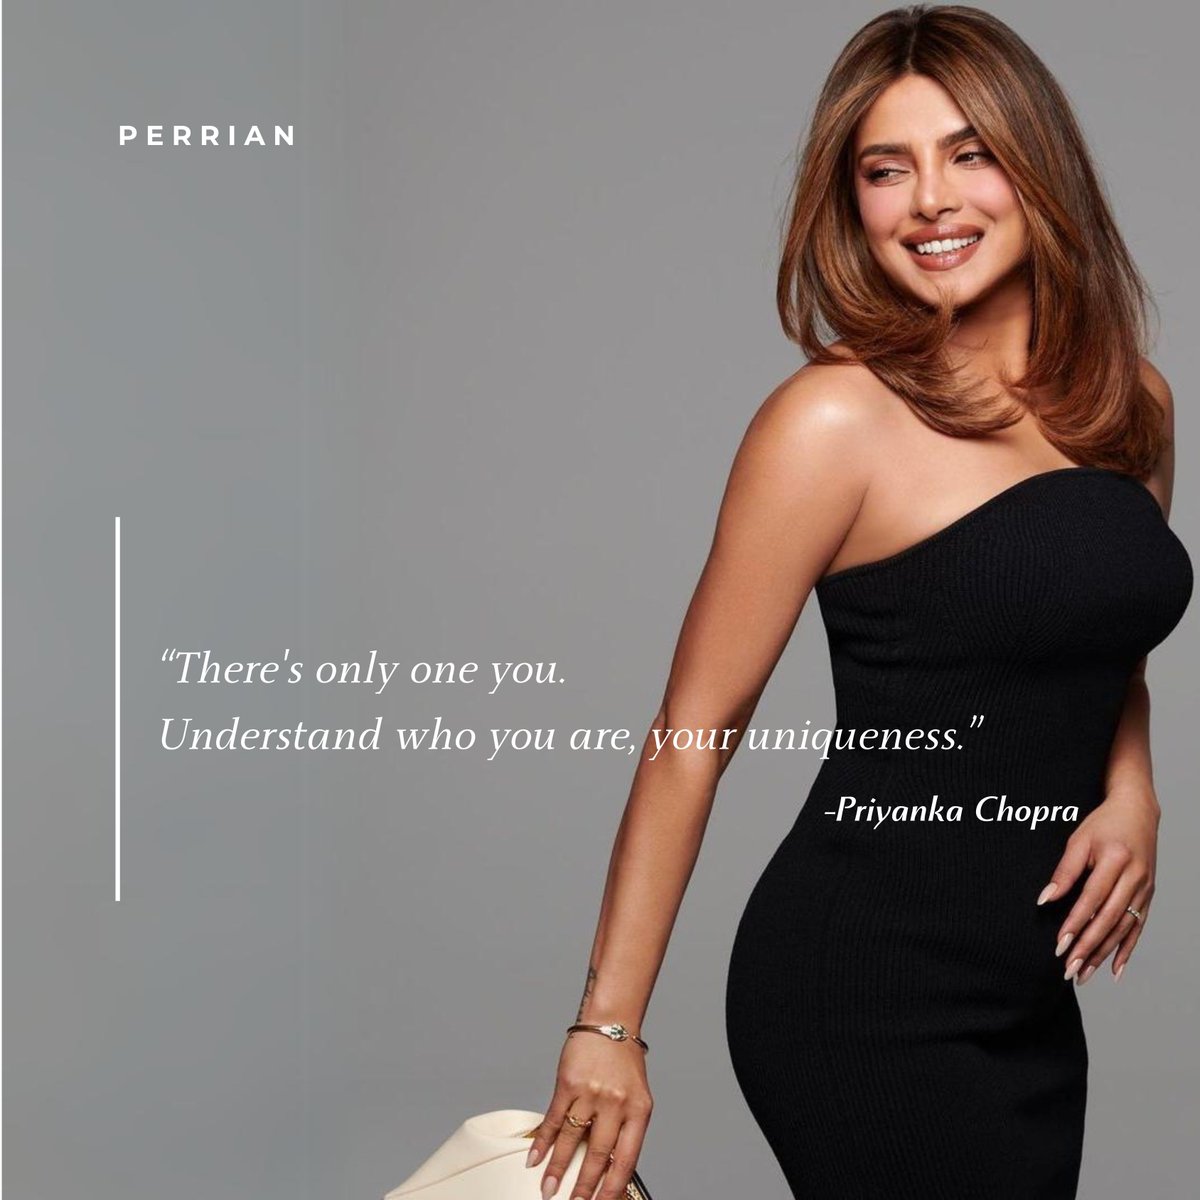 @priyankachopra  defines what it means to be a confident, empowered woman.
perrian.com
#priyankachopra #Confident #her